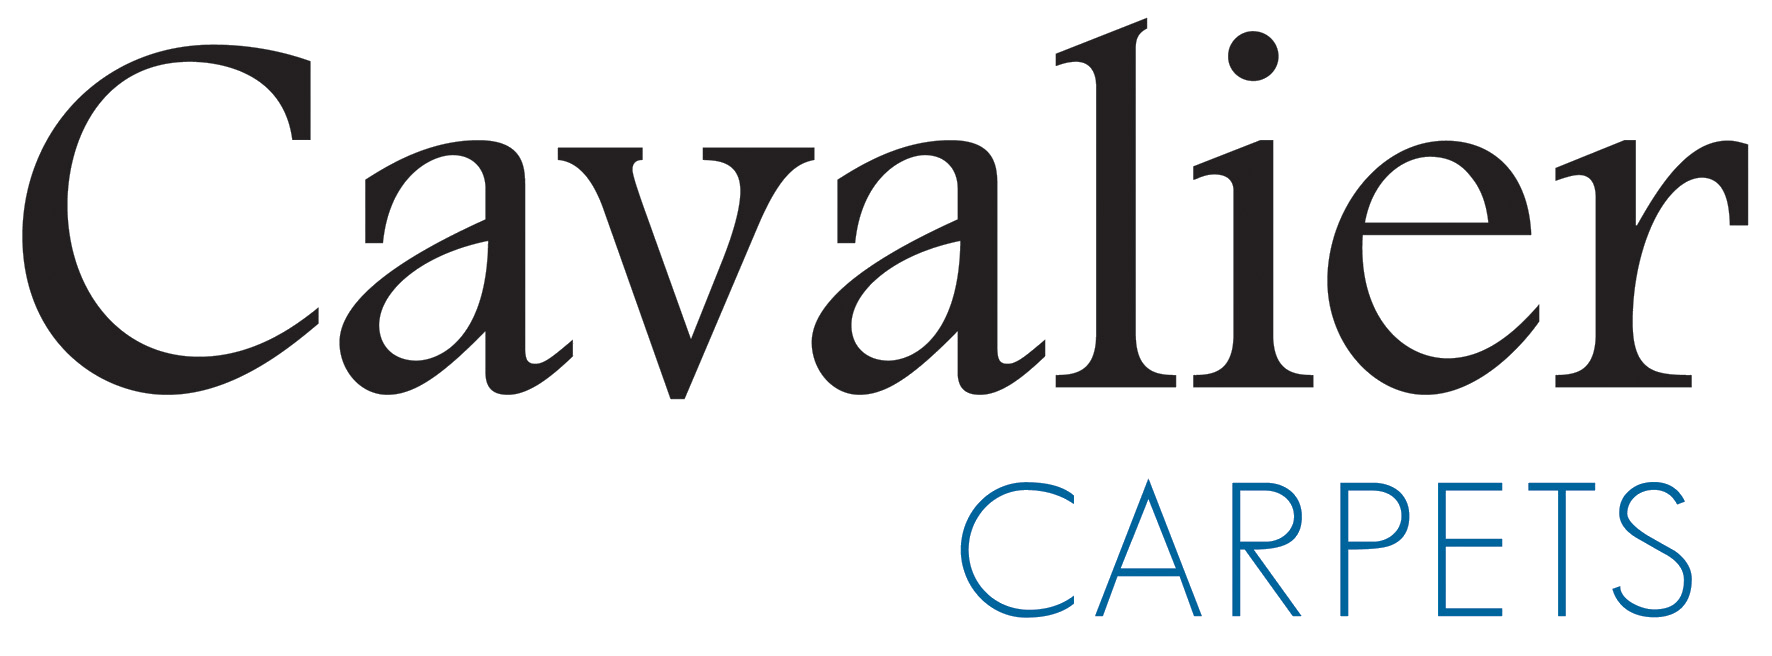 cavalier carpets logo